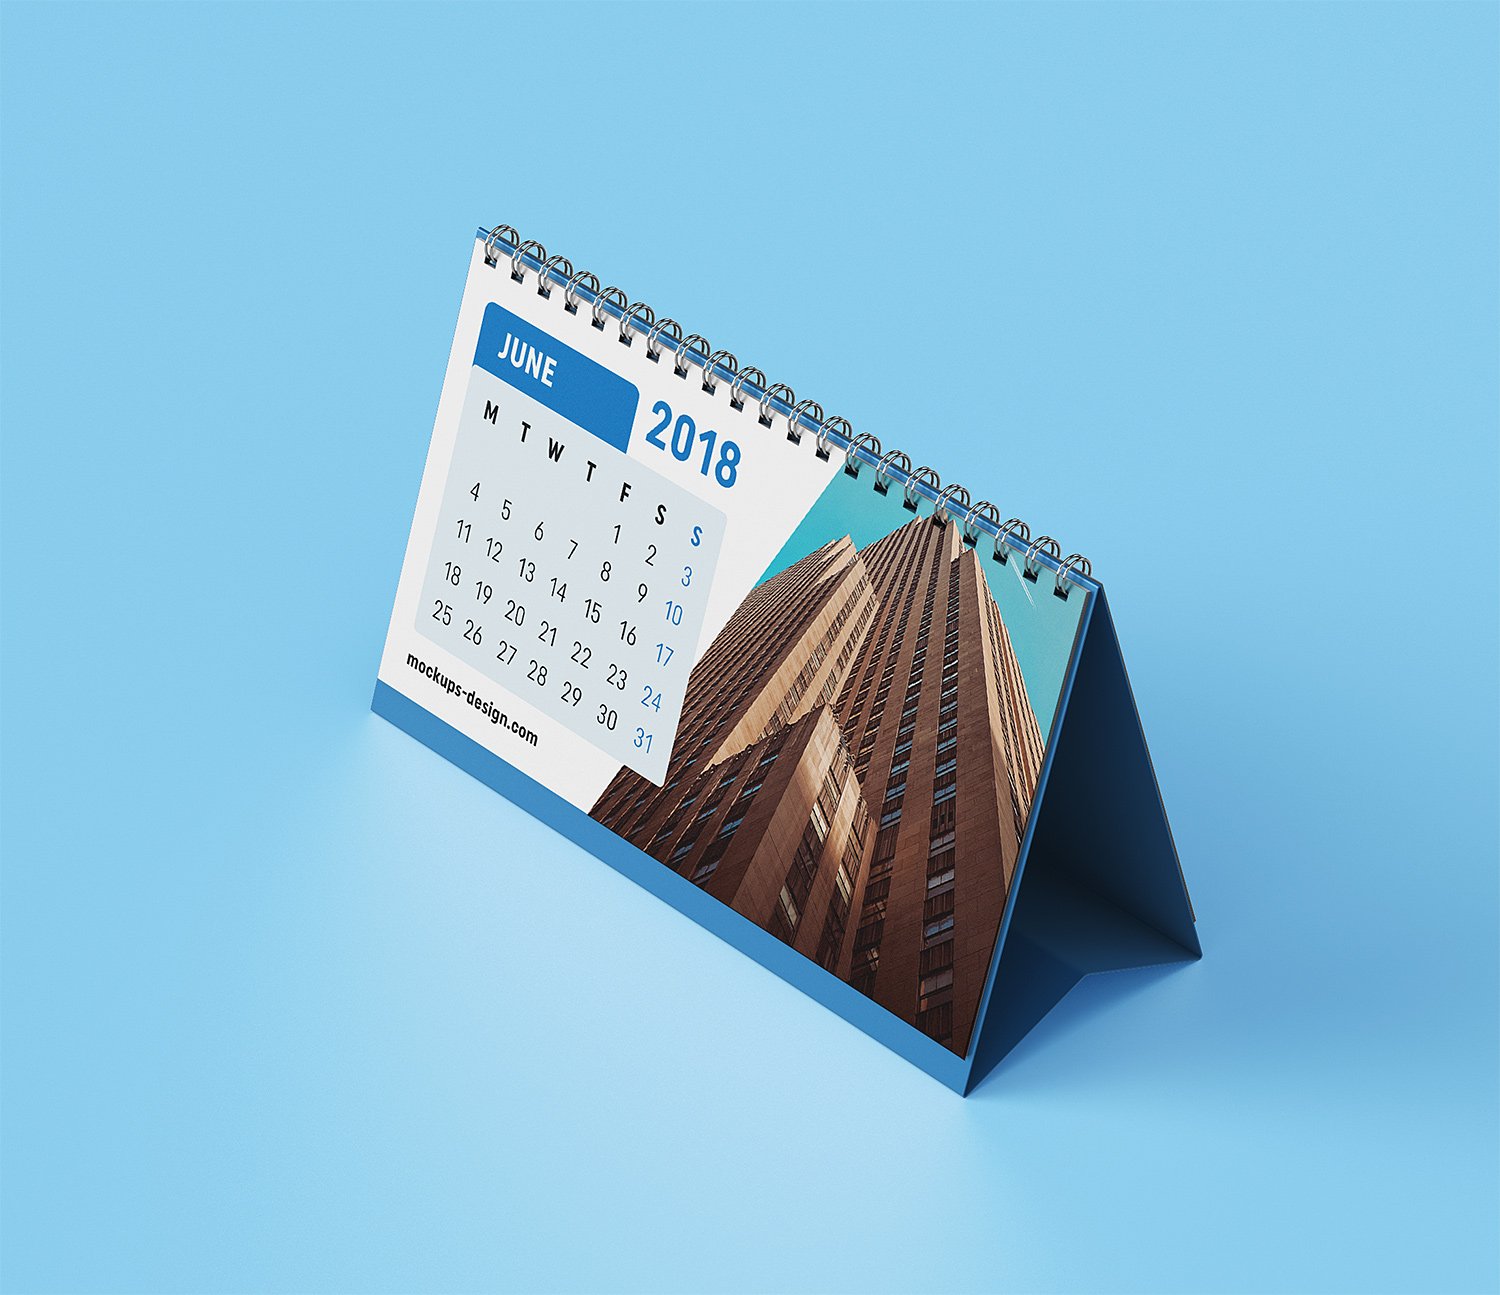 Free Desk Calendar Mockup